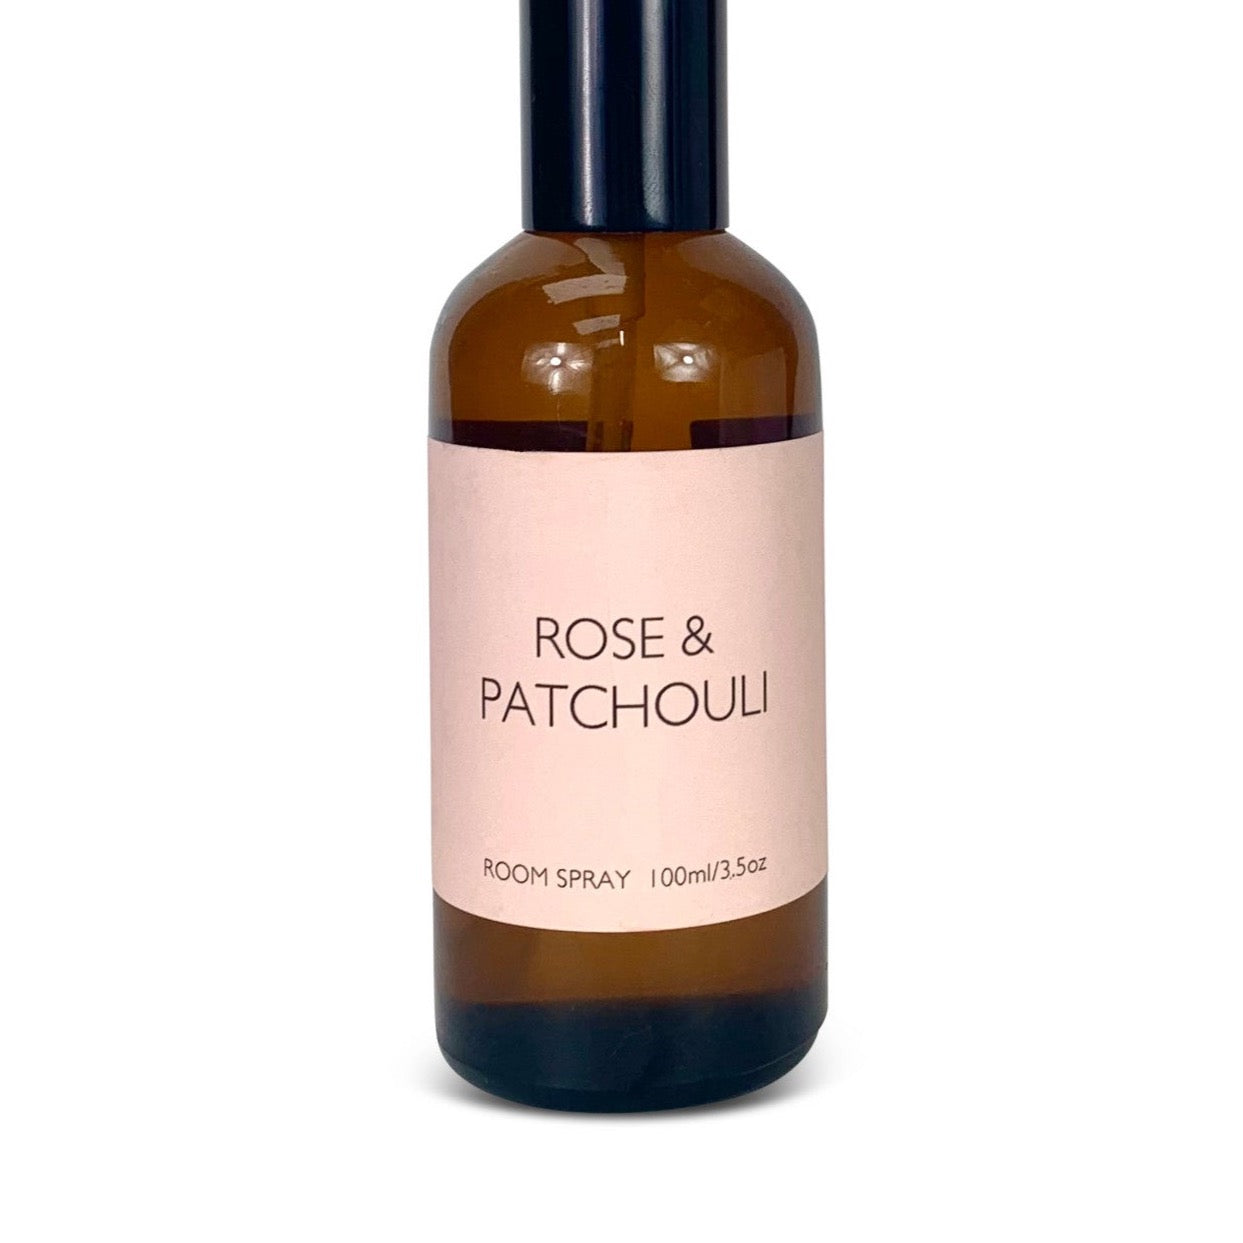 Rose & Patchouli Room Spray